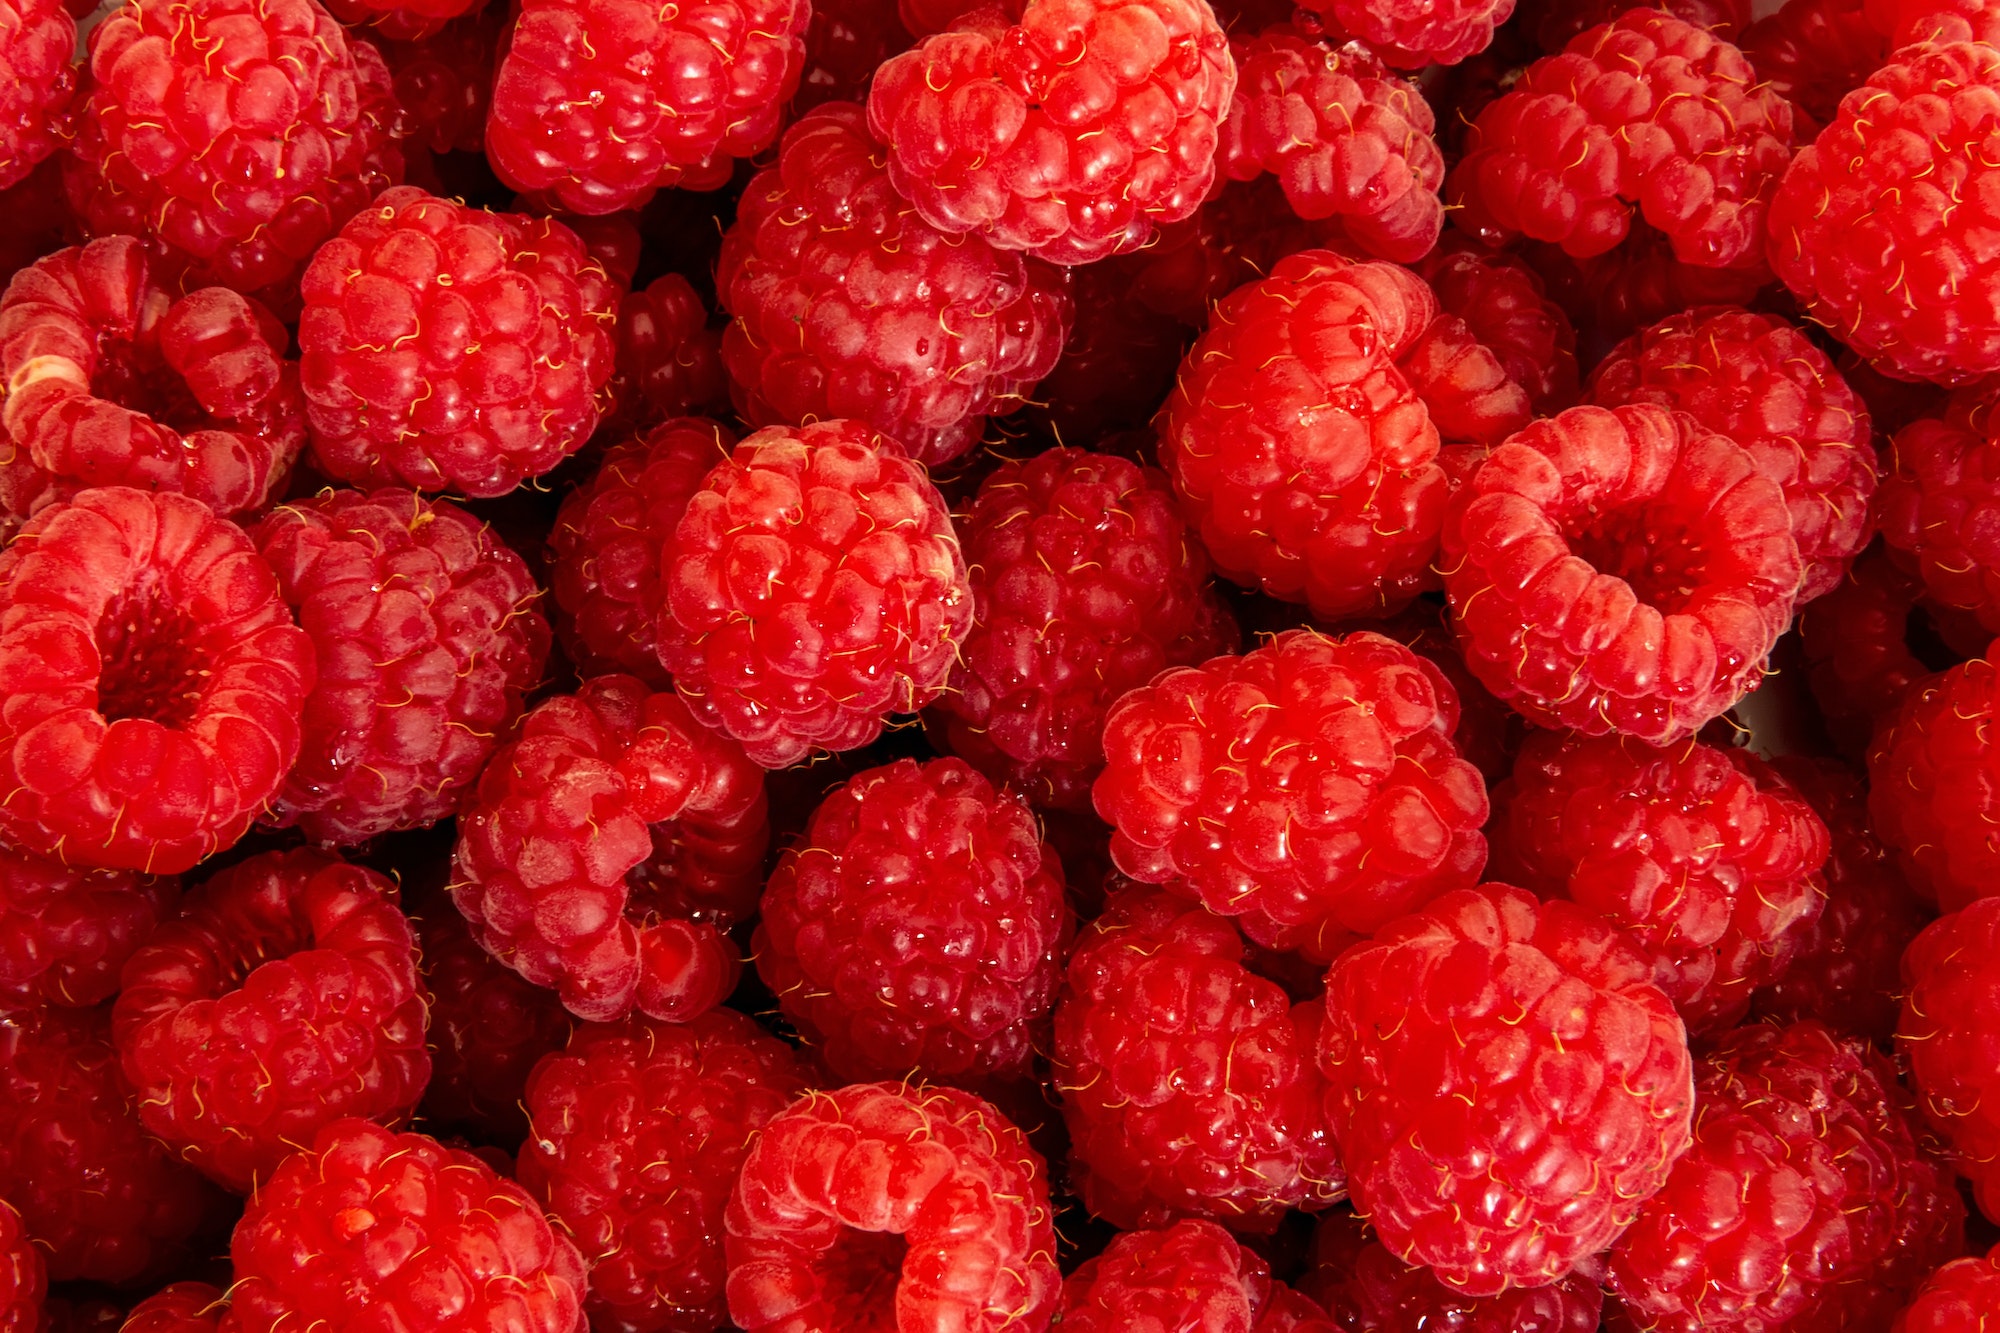 Ripe raspberries. Berries.Scarlet. Raspberry background. Raspberry surface